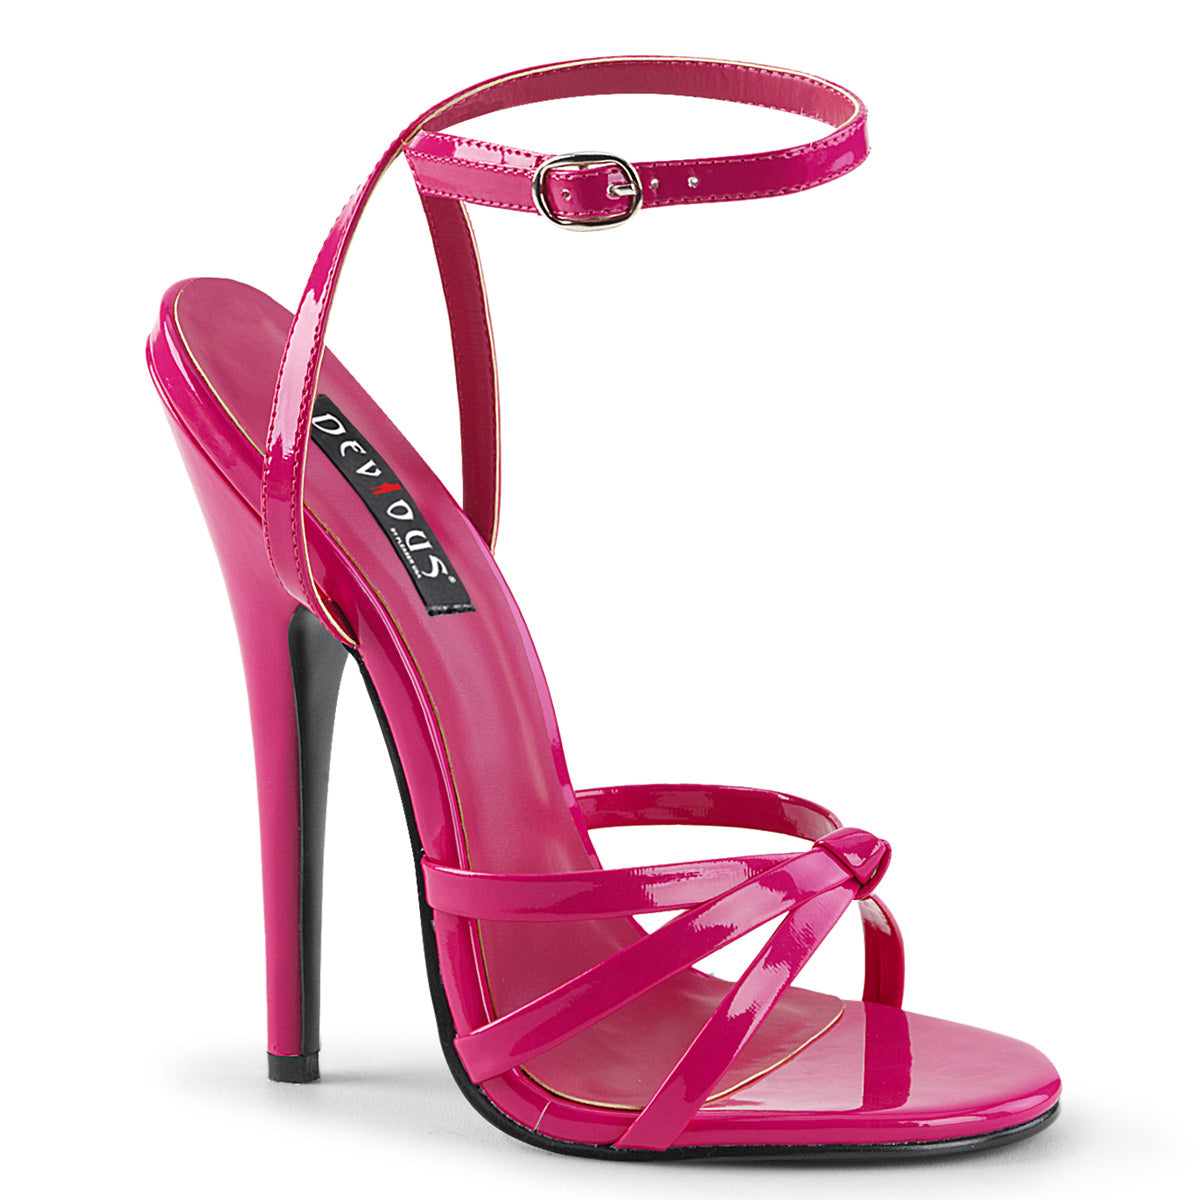 Devious Womens Sandals DOMINA-108 Hot Pink Pat